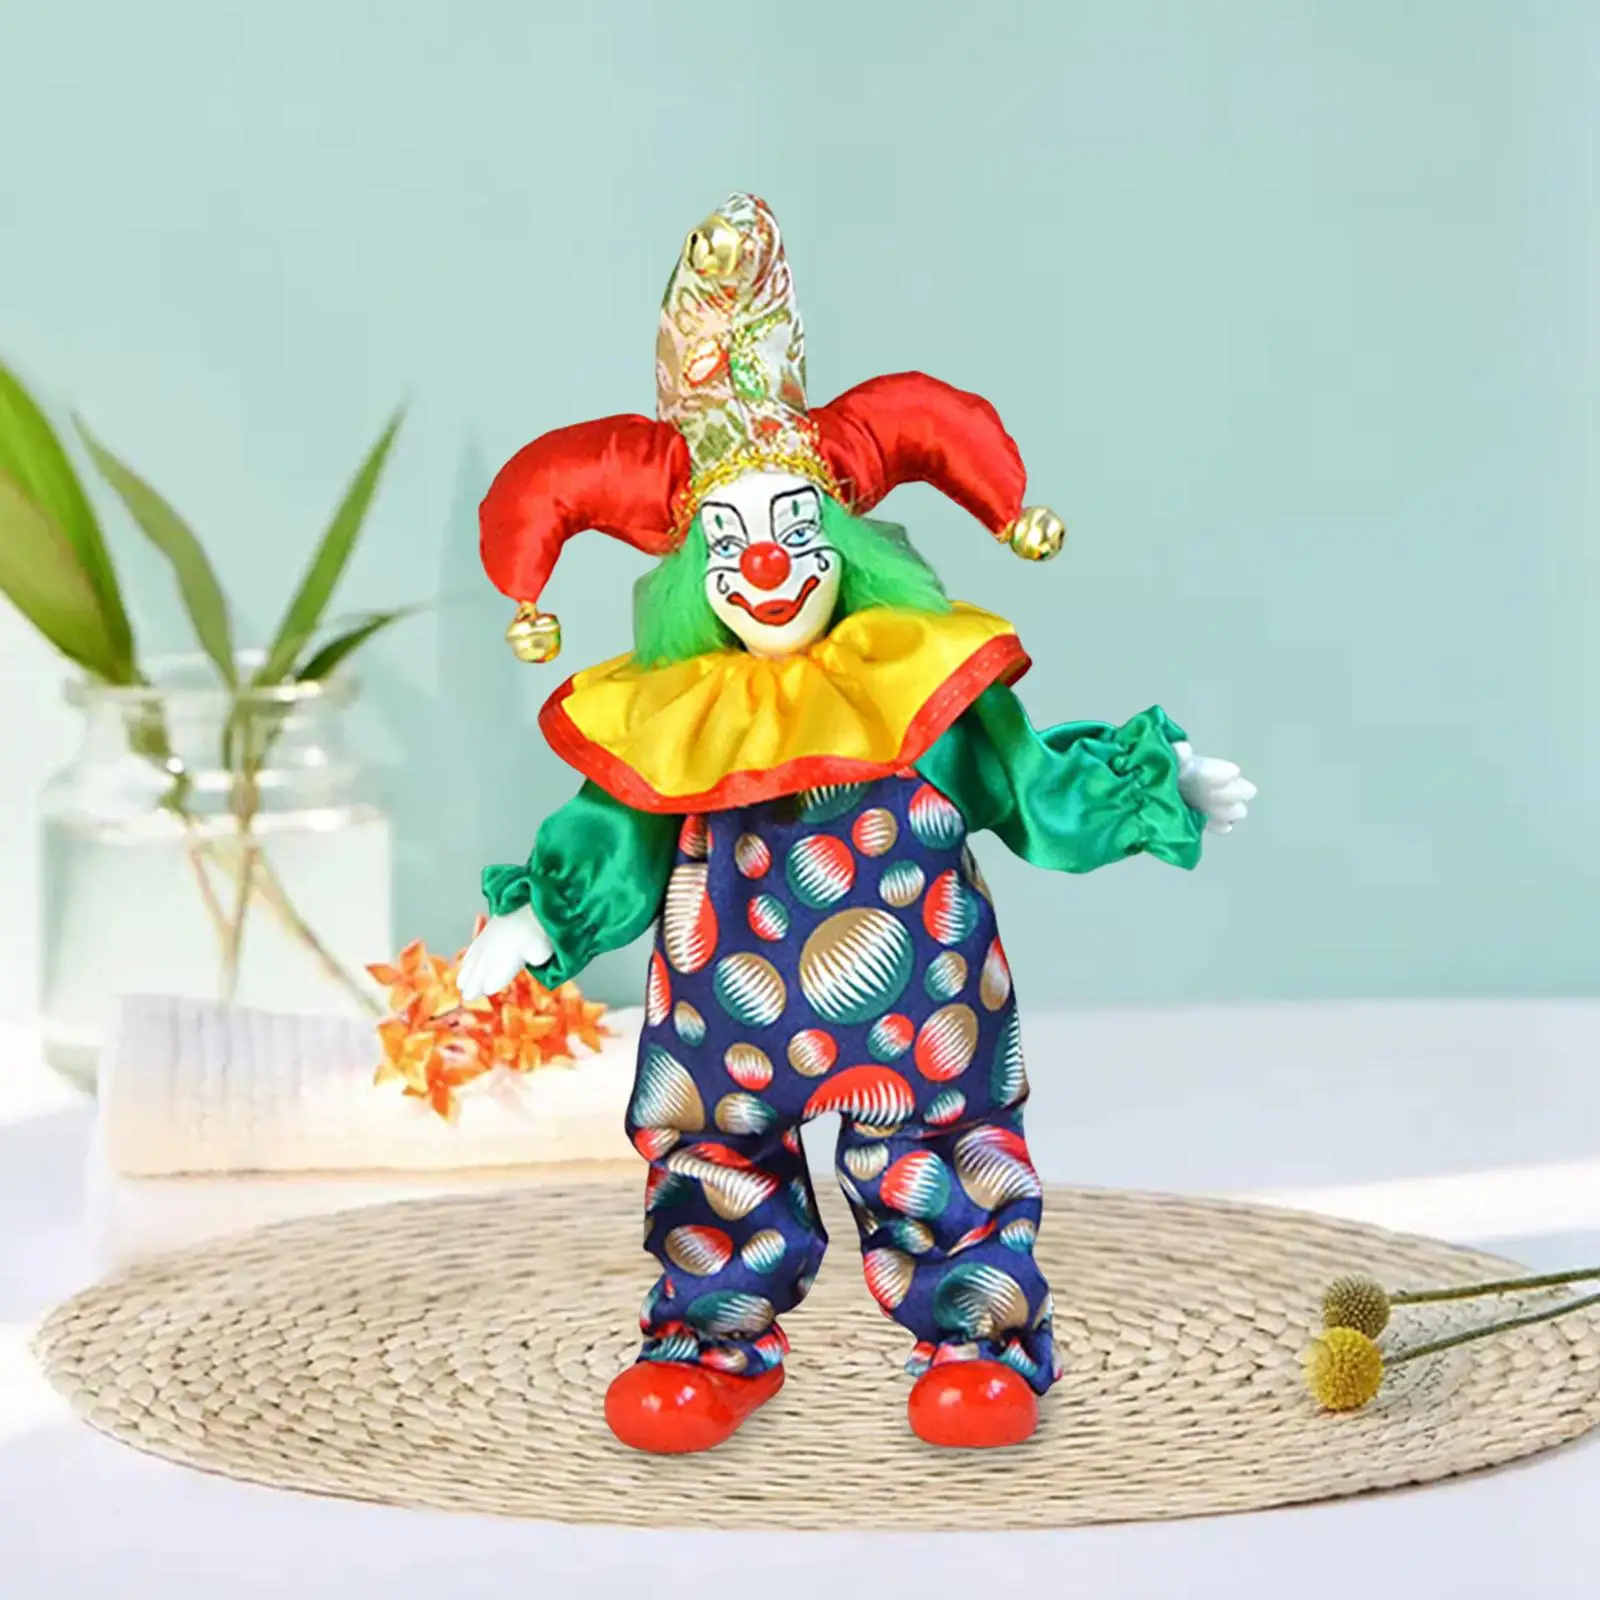 Funny Clown Figurine Decor Porcelain Dolls Gift Artwork Ornament 25cm for Housewarming Shop Window Desktop Bookshelf Adults Kids